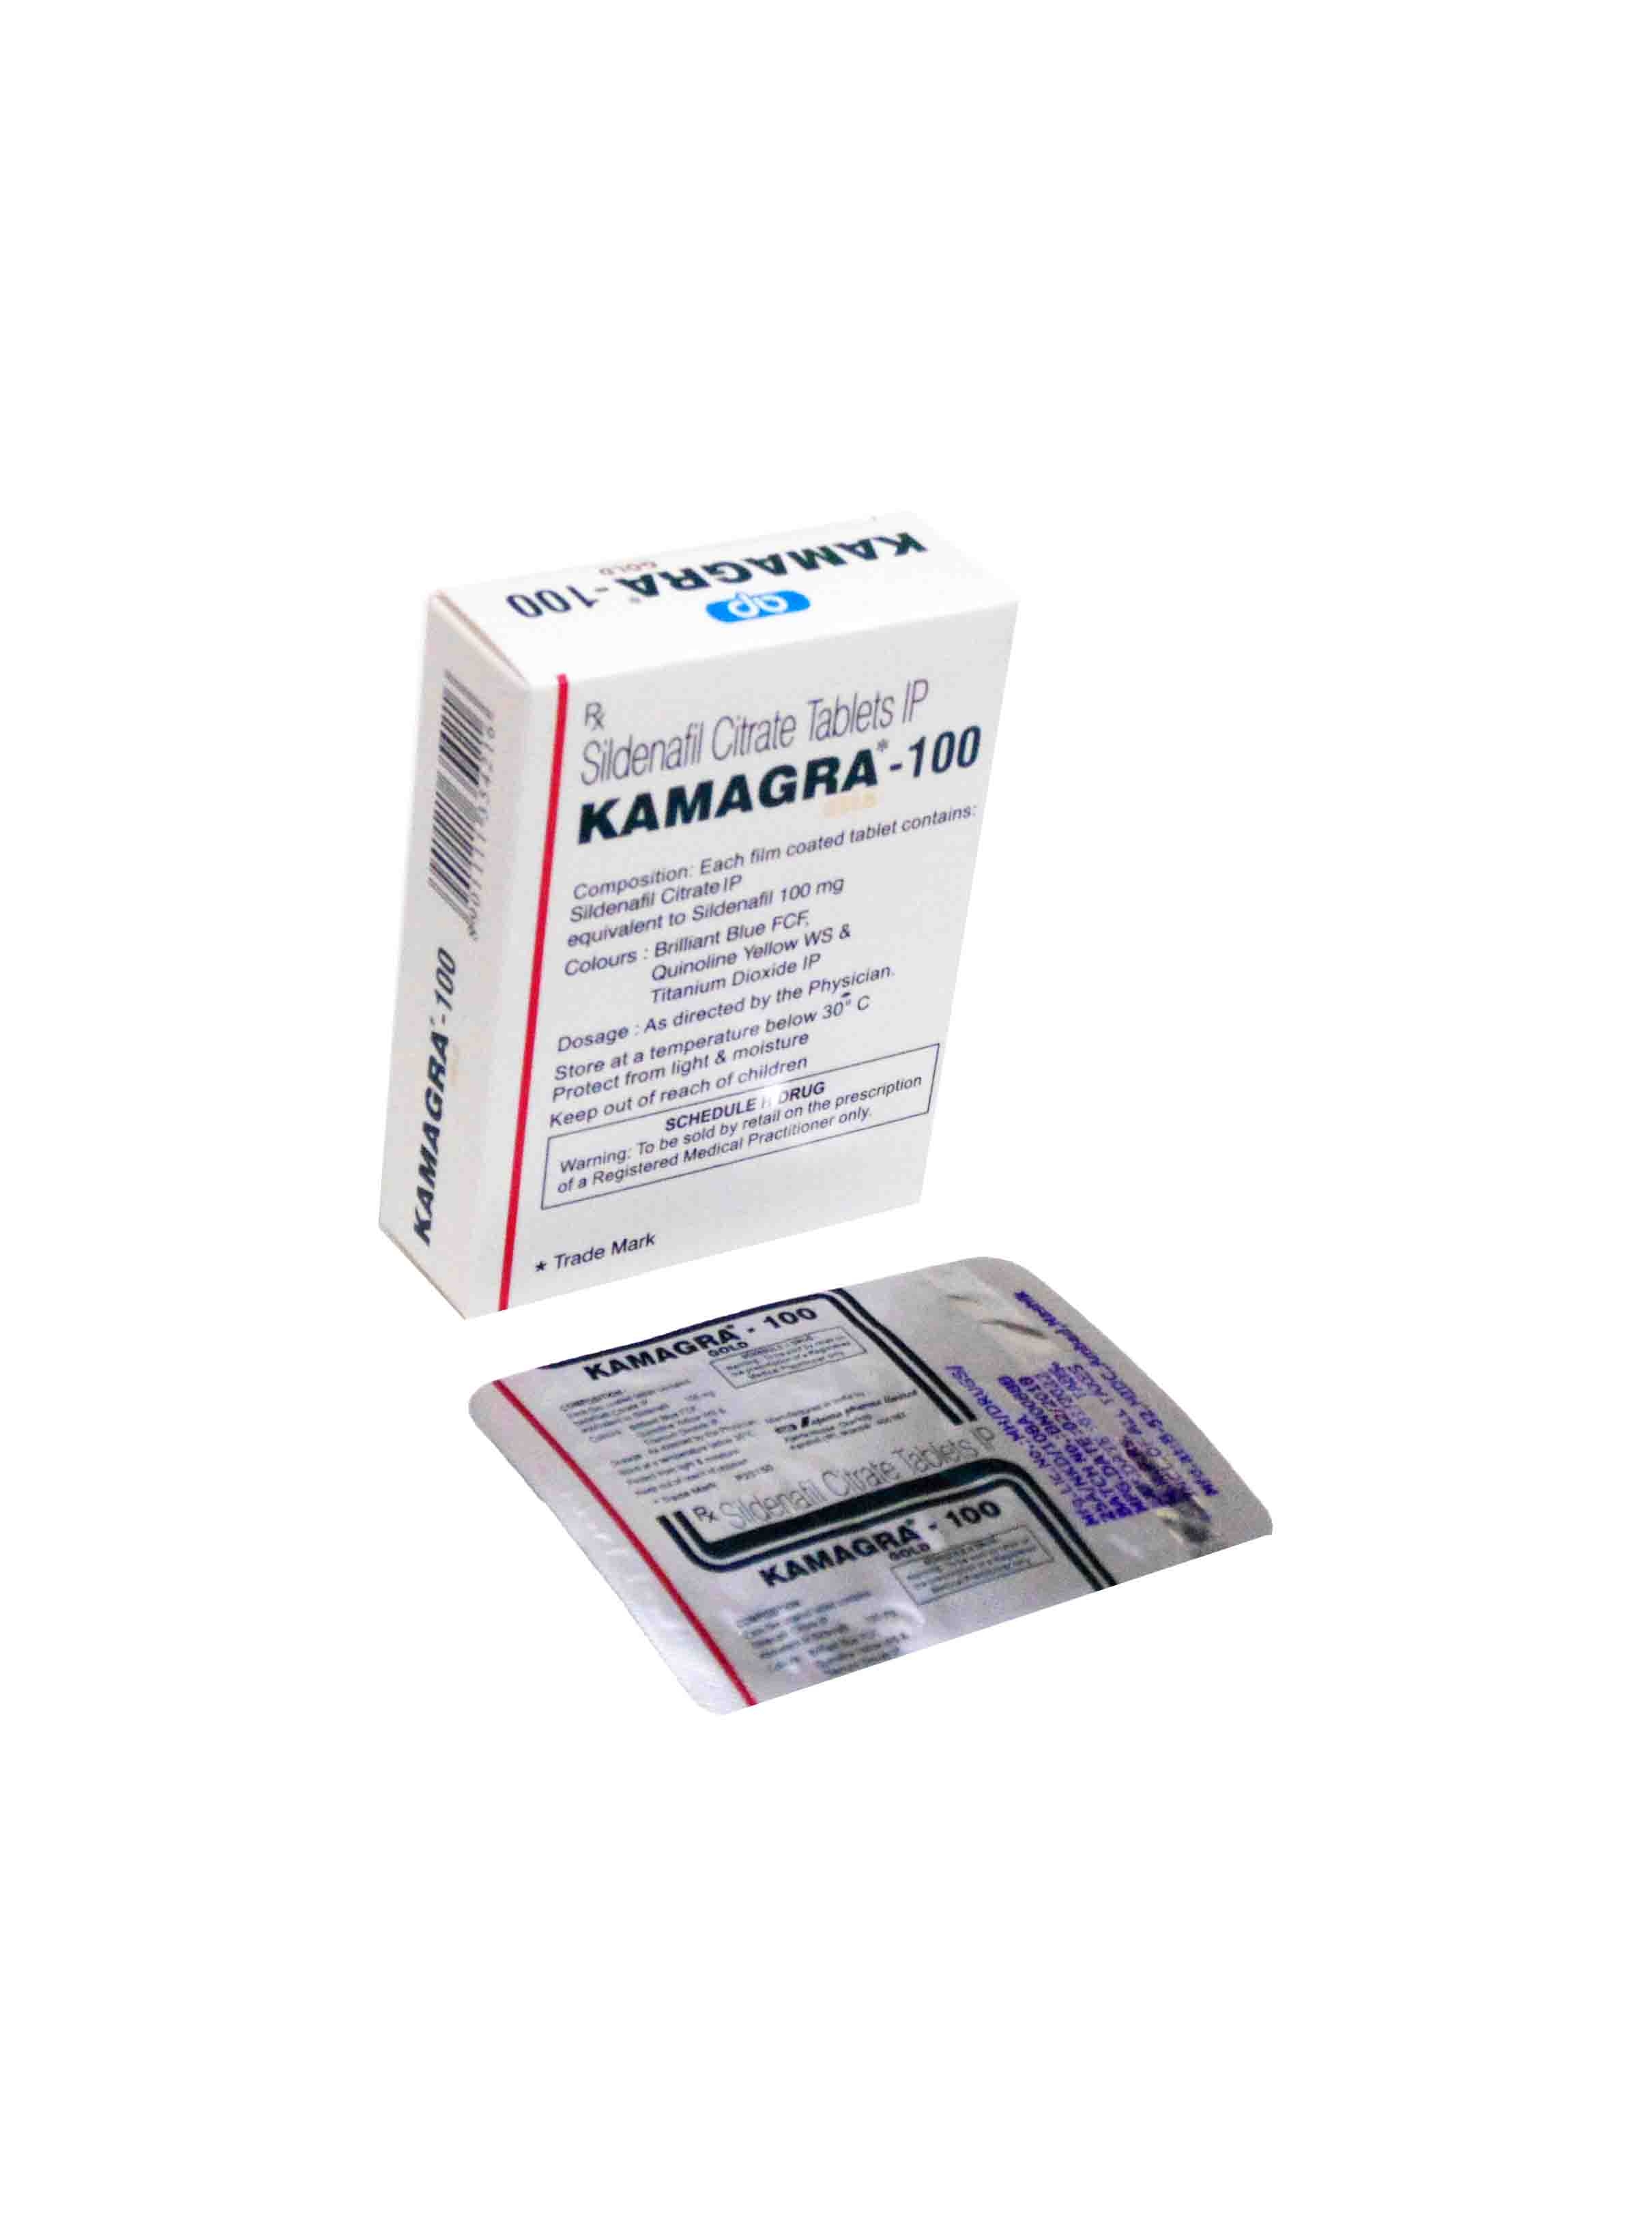 Kamagra 100mg Tablet, Sildenafil Citrate